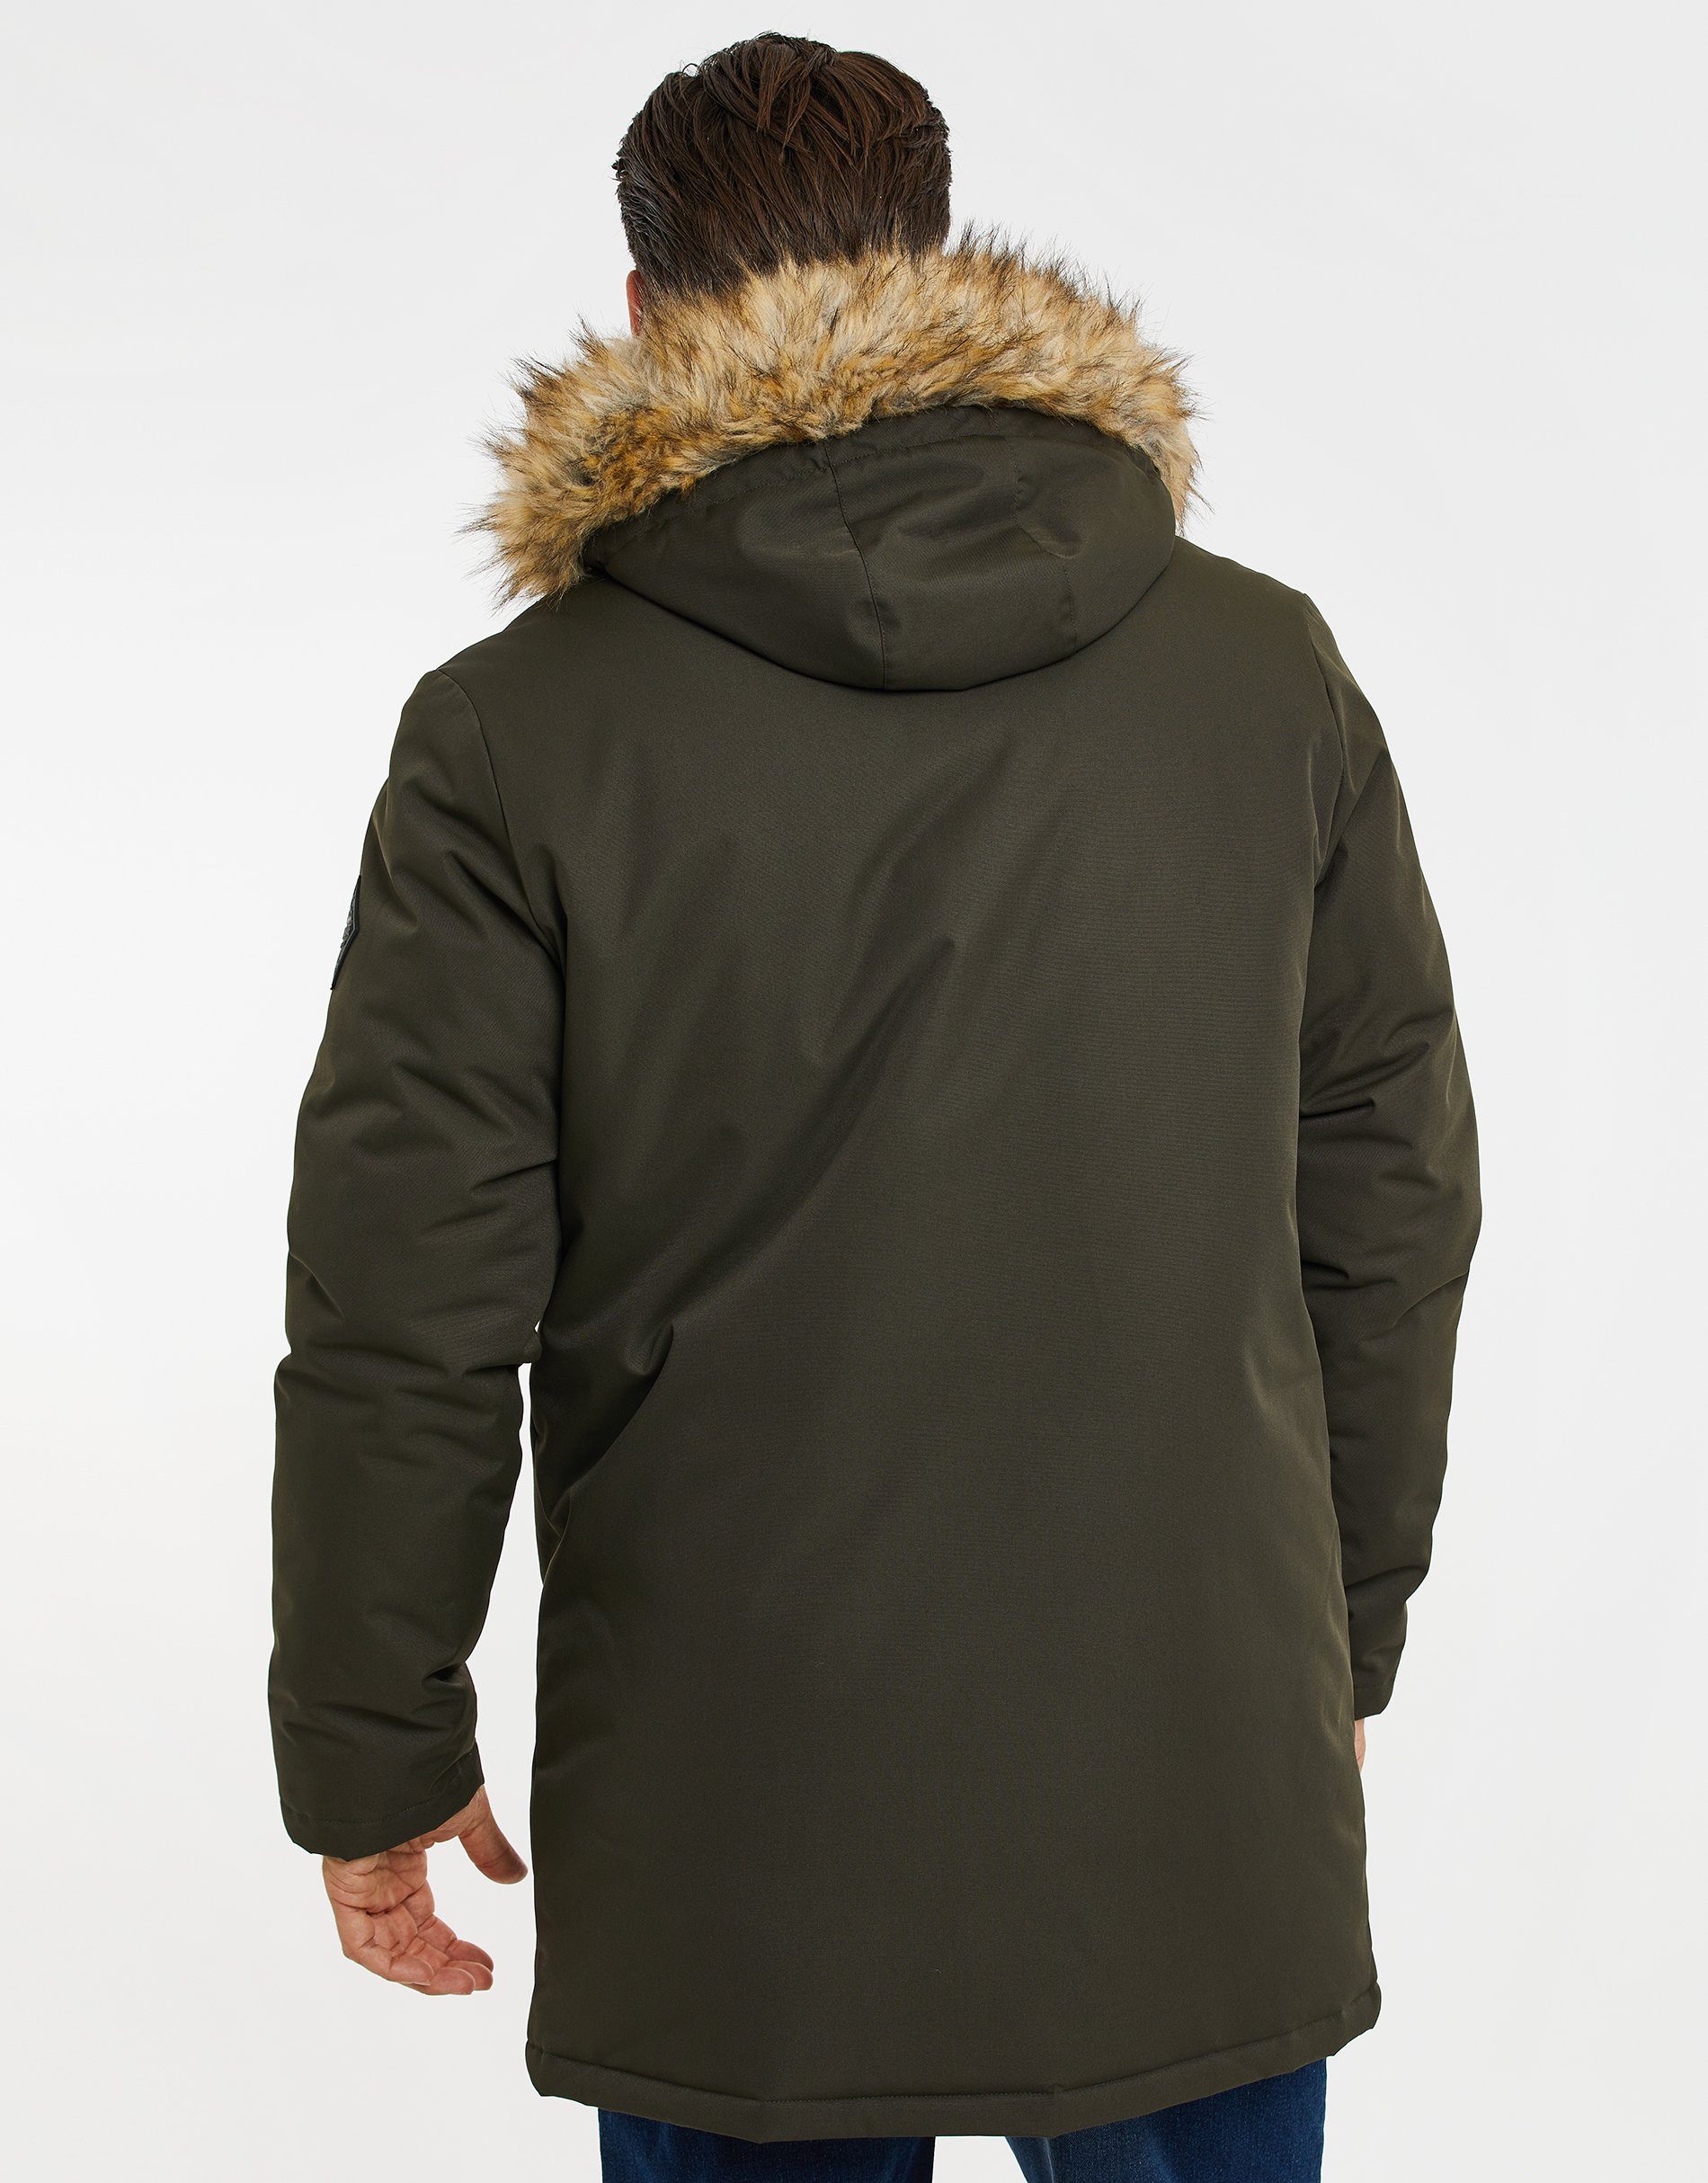 Clarkston Global Jacket Threadbare Winterjacke THB Standard zertifiziert olivgrün Recycled Khaki- (GRS)